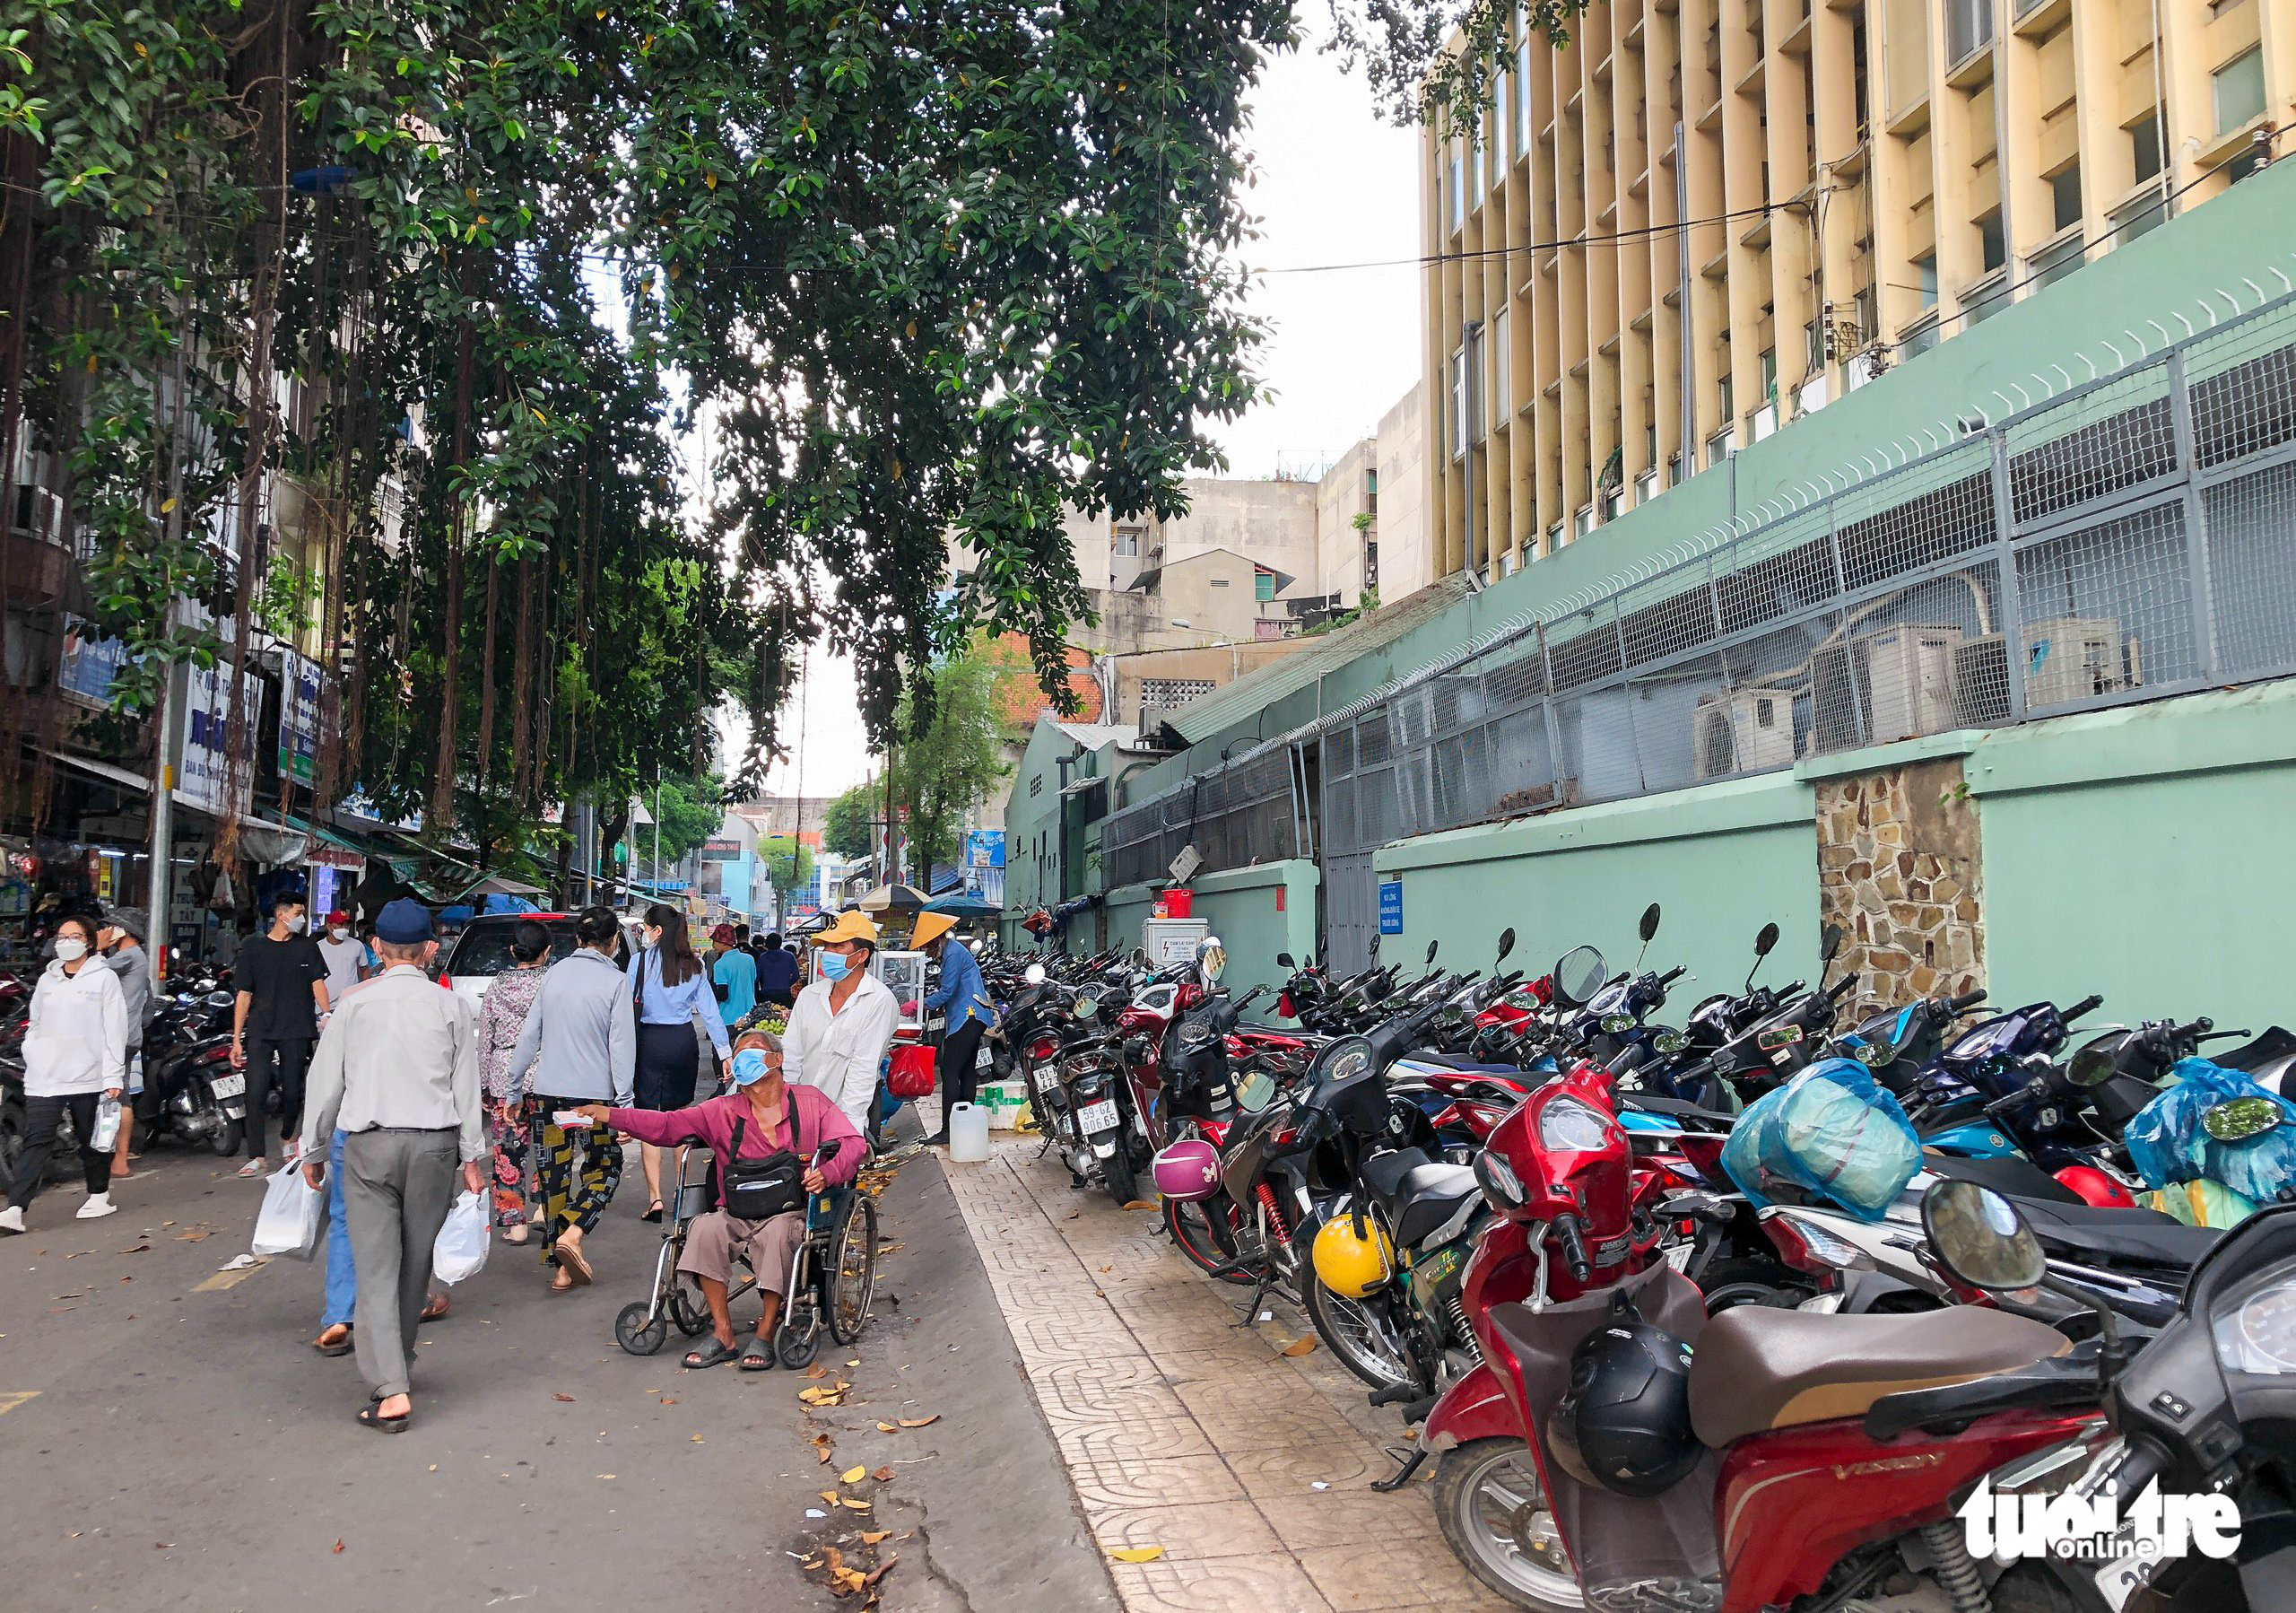 Parking service operators, street vendors encroach on sidewalks near hospitals in Ho Chi Minh City